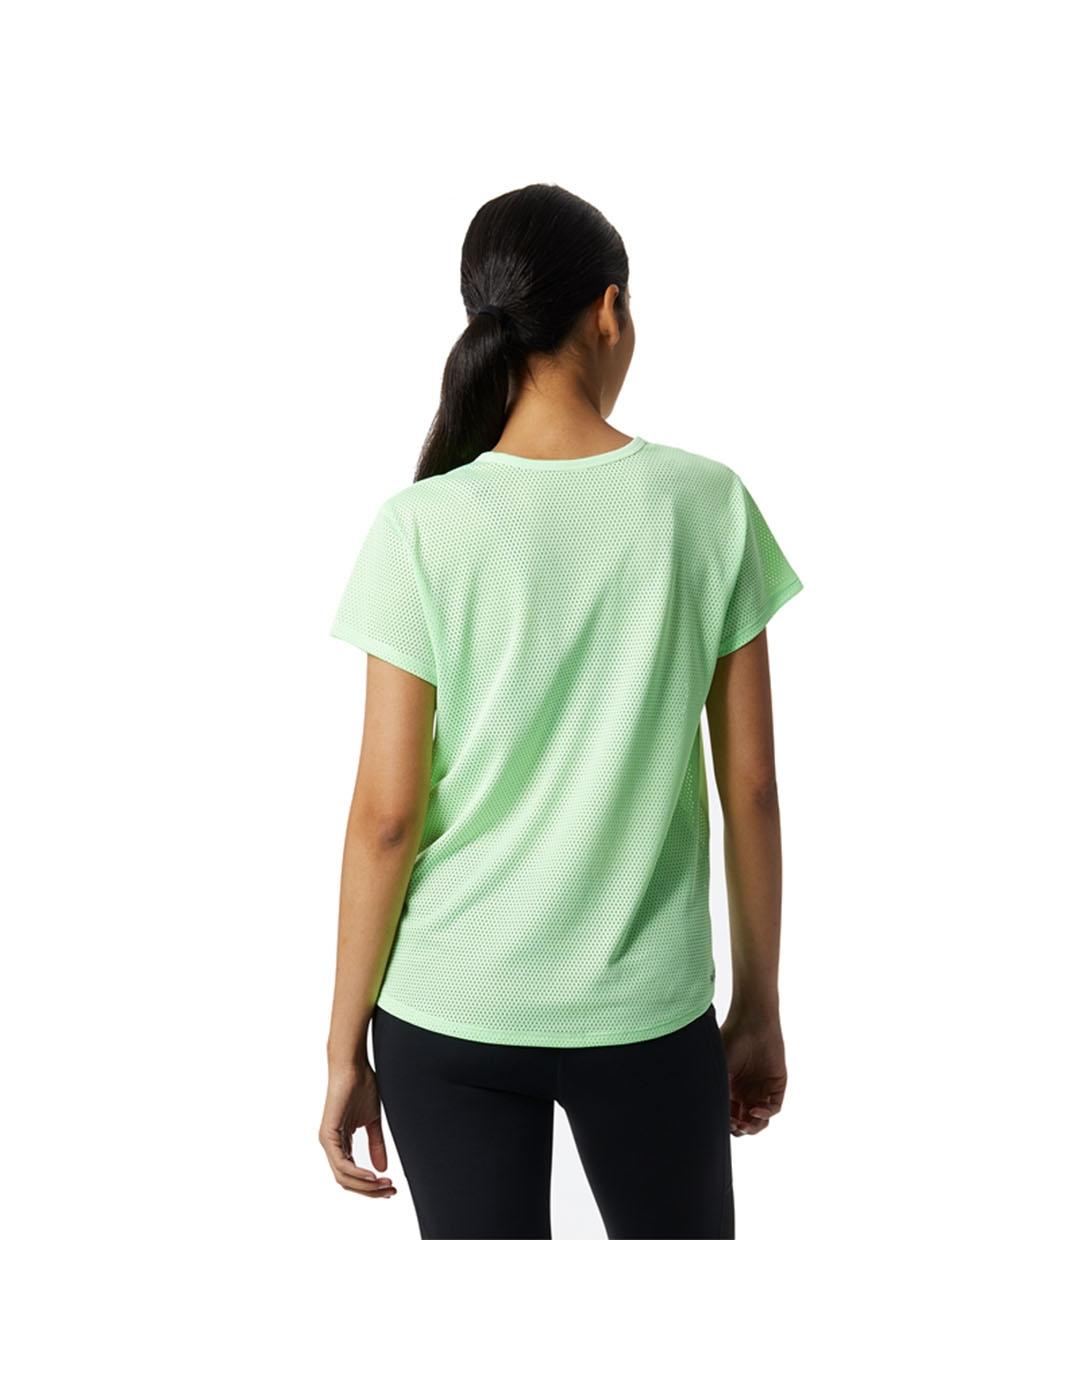 Camiseta Mujer New Balance Prt F Flt Verde